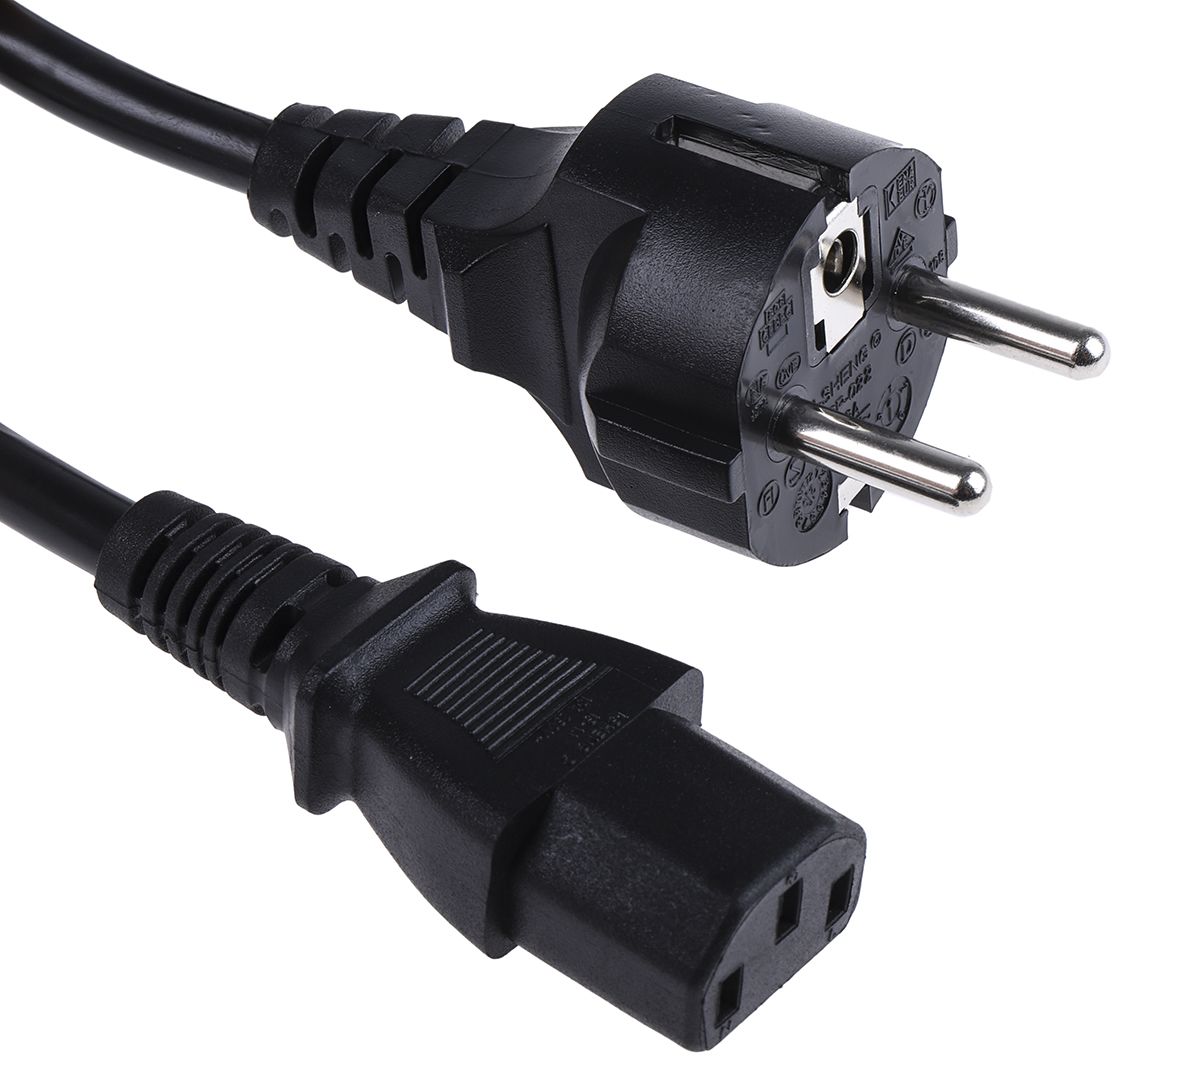 RS Pro 1m power cord, C13 to European Plug (CEE 7/7)